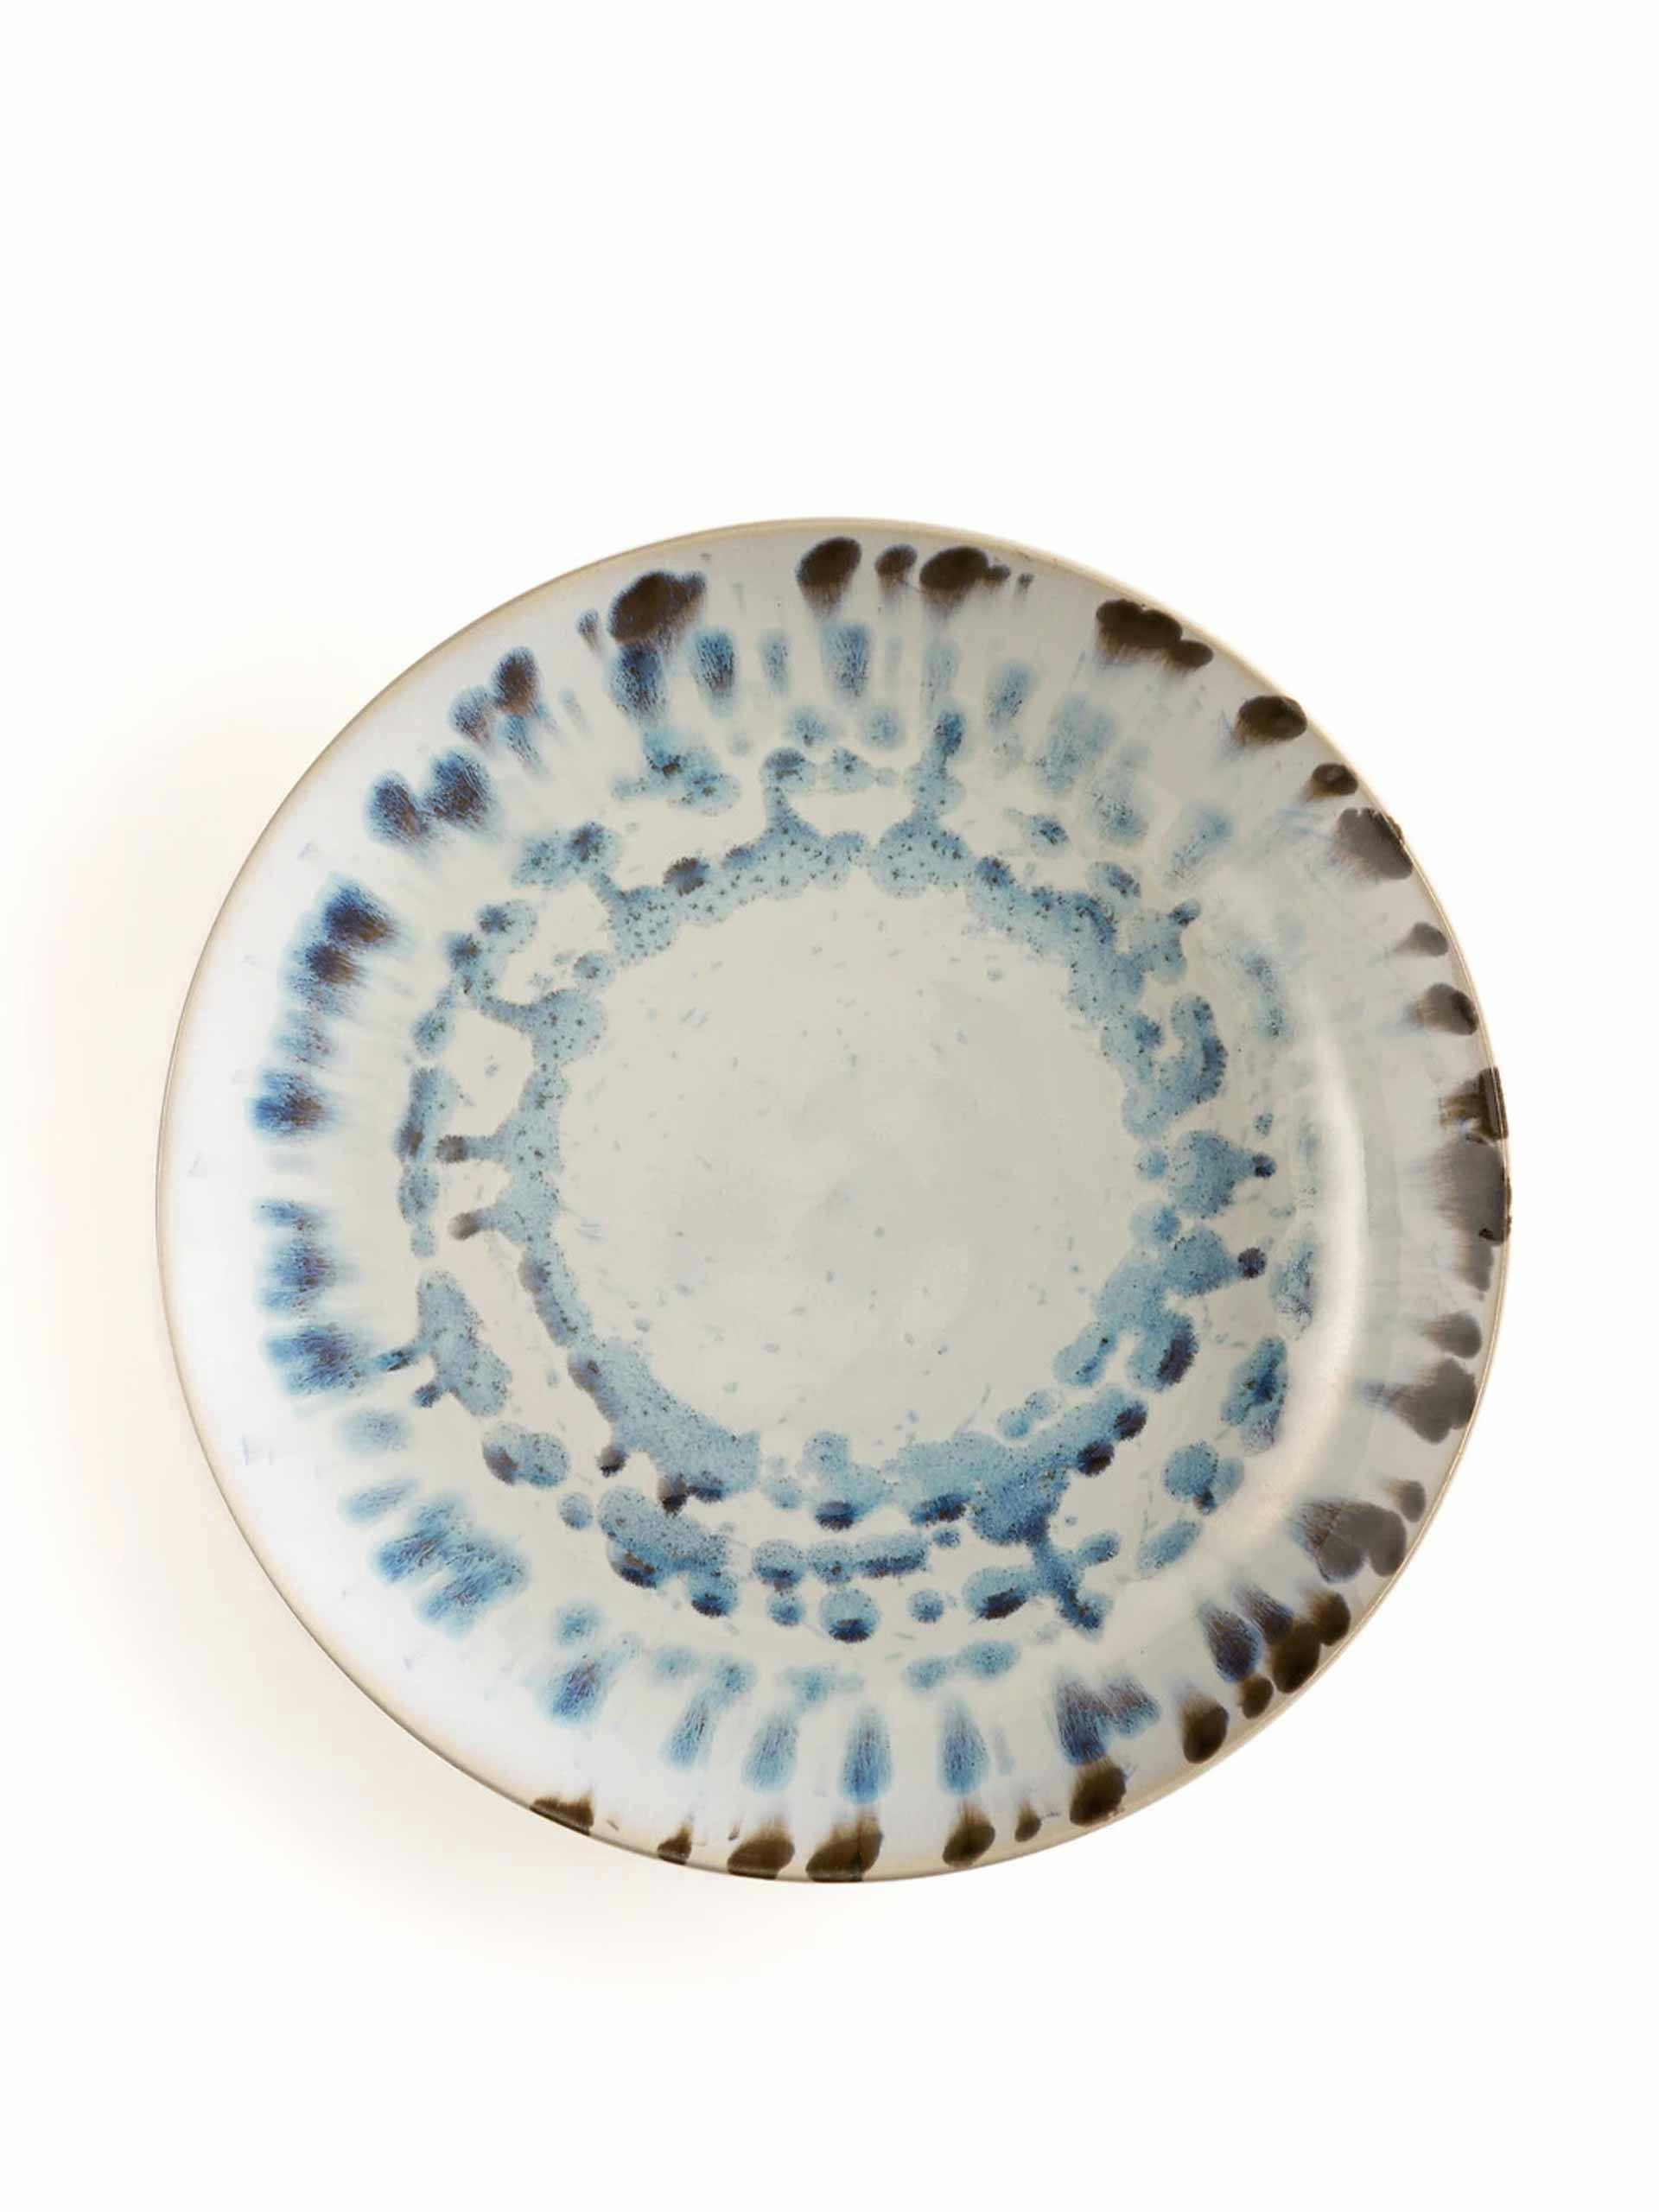 White and blue stoneware plates